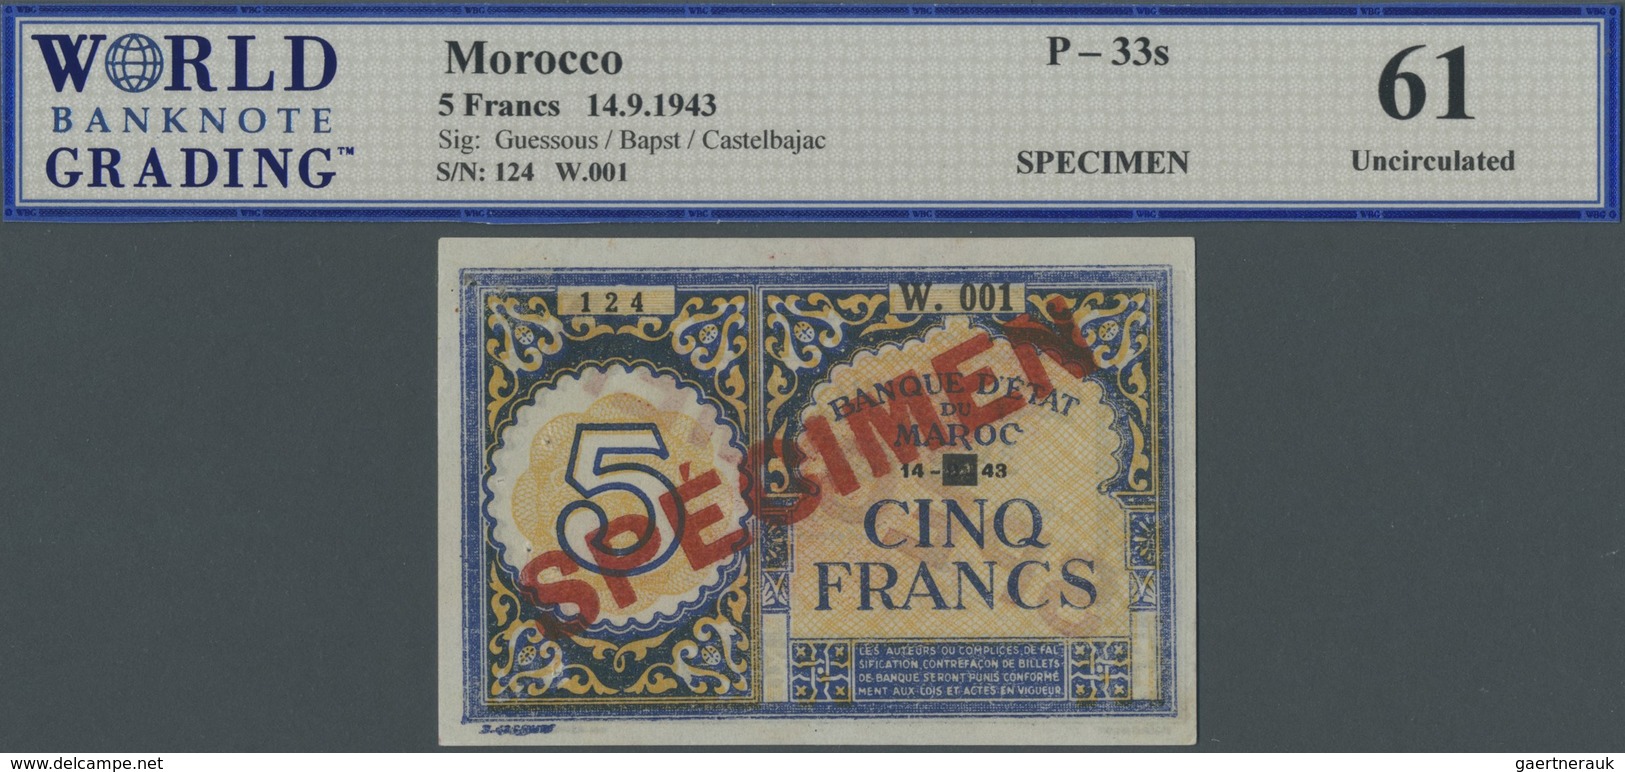 Morocco / Marokko: 5 Francs 1943 Specimen P. 33s, Some Pinholes At Left, WBG Graded 61 UNC. - Morocco